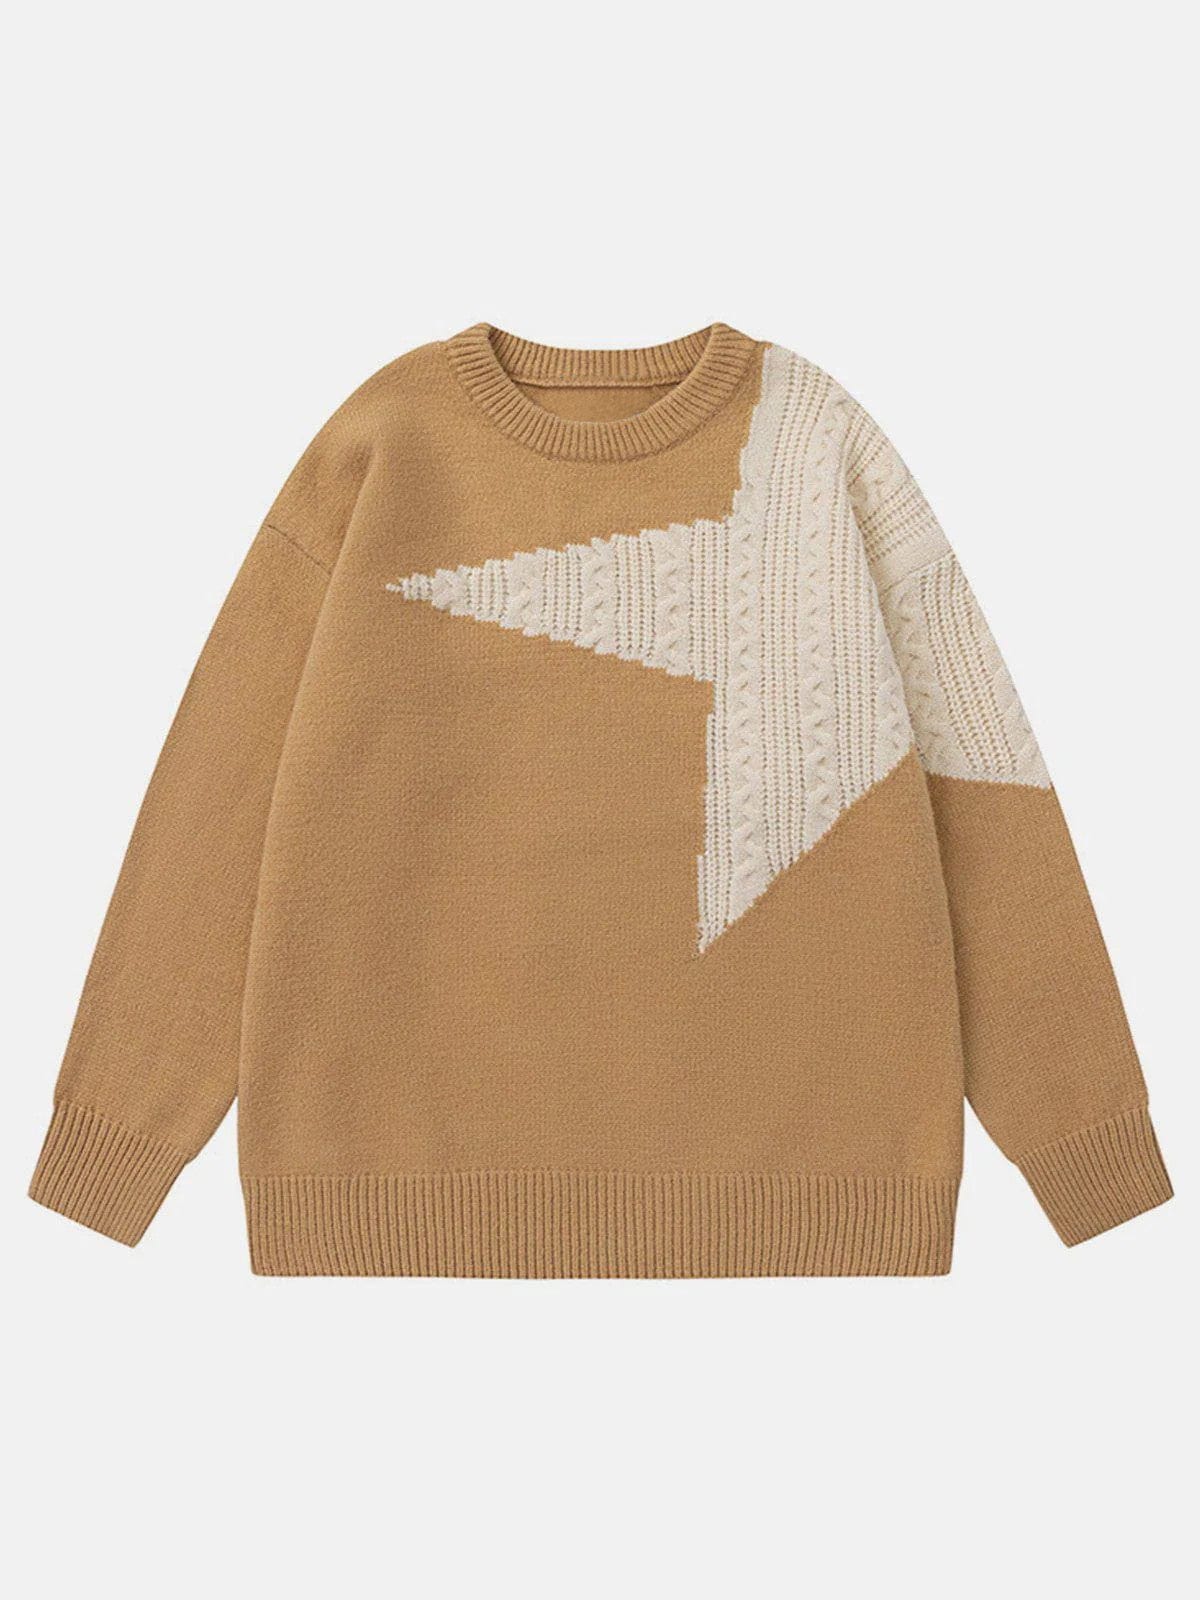 Star Patchwork Sweater